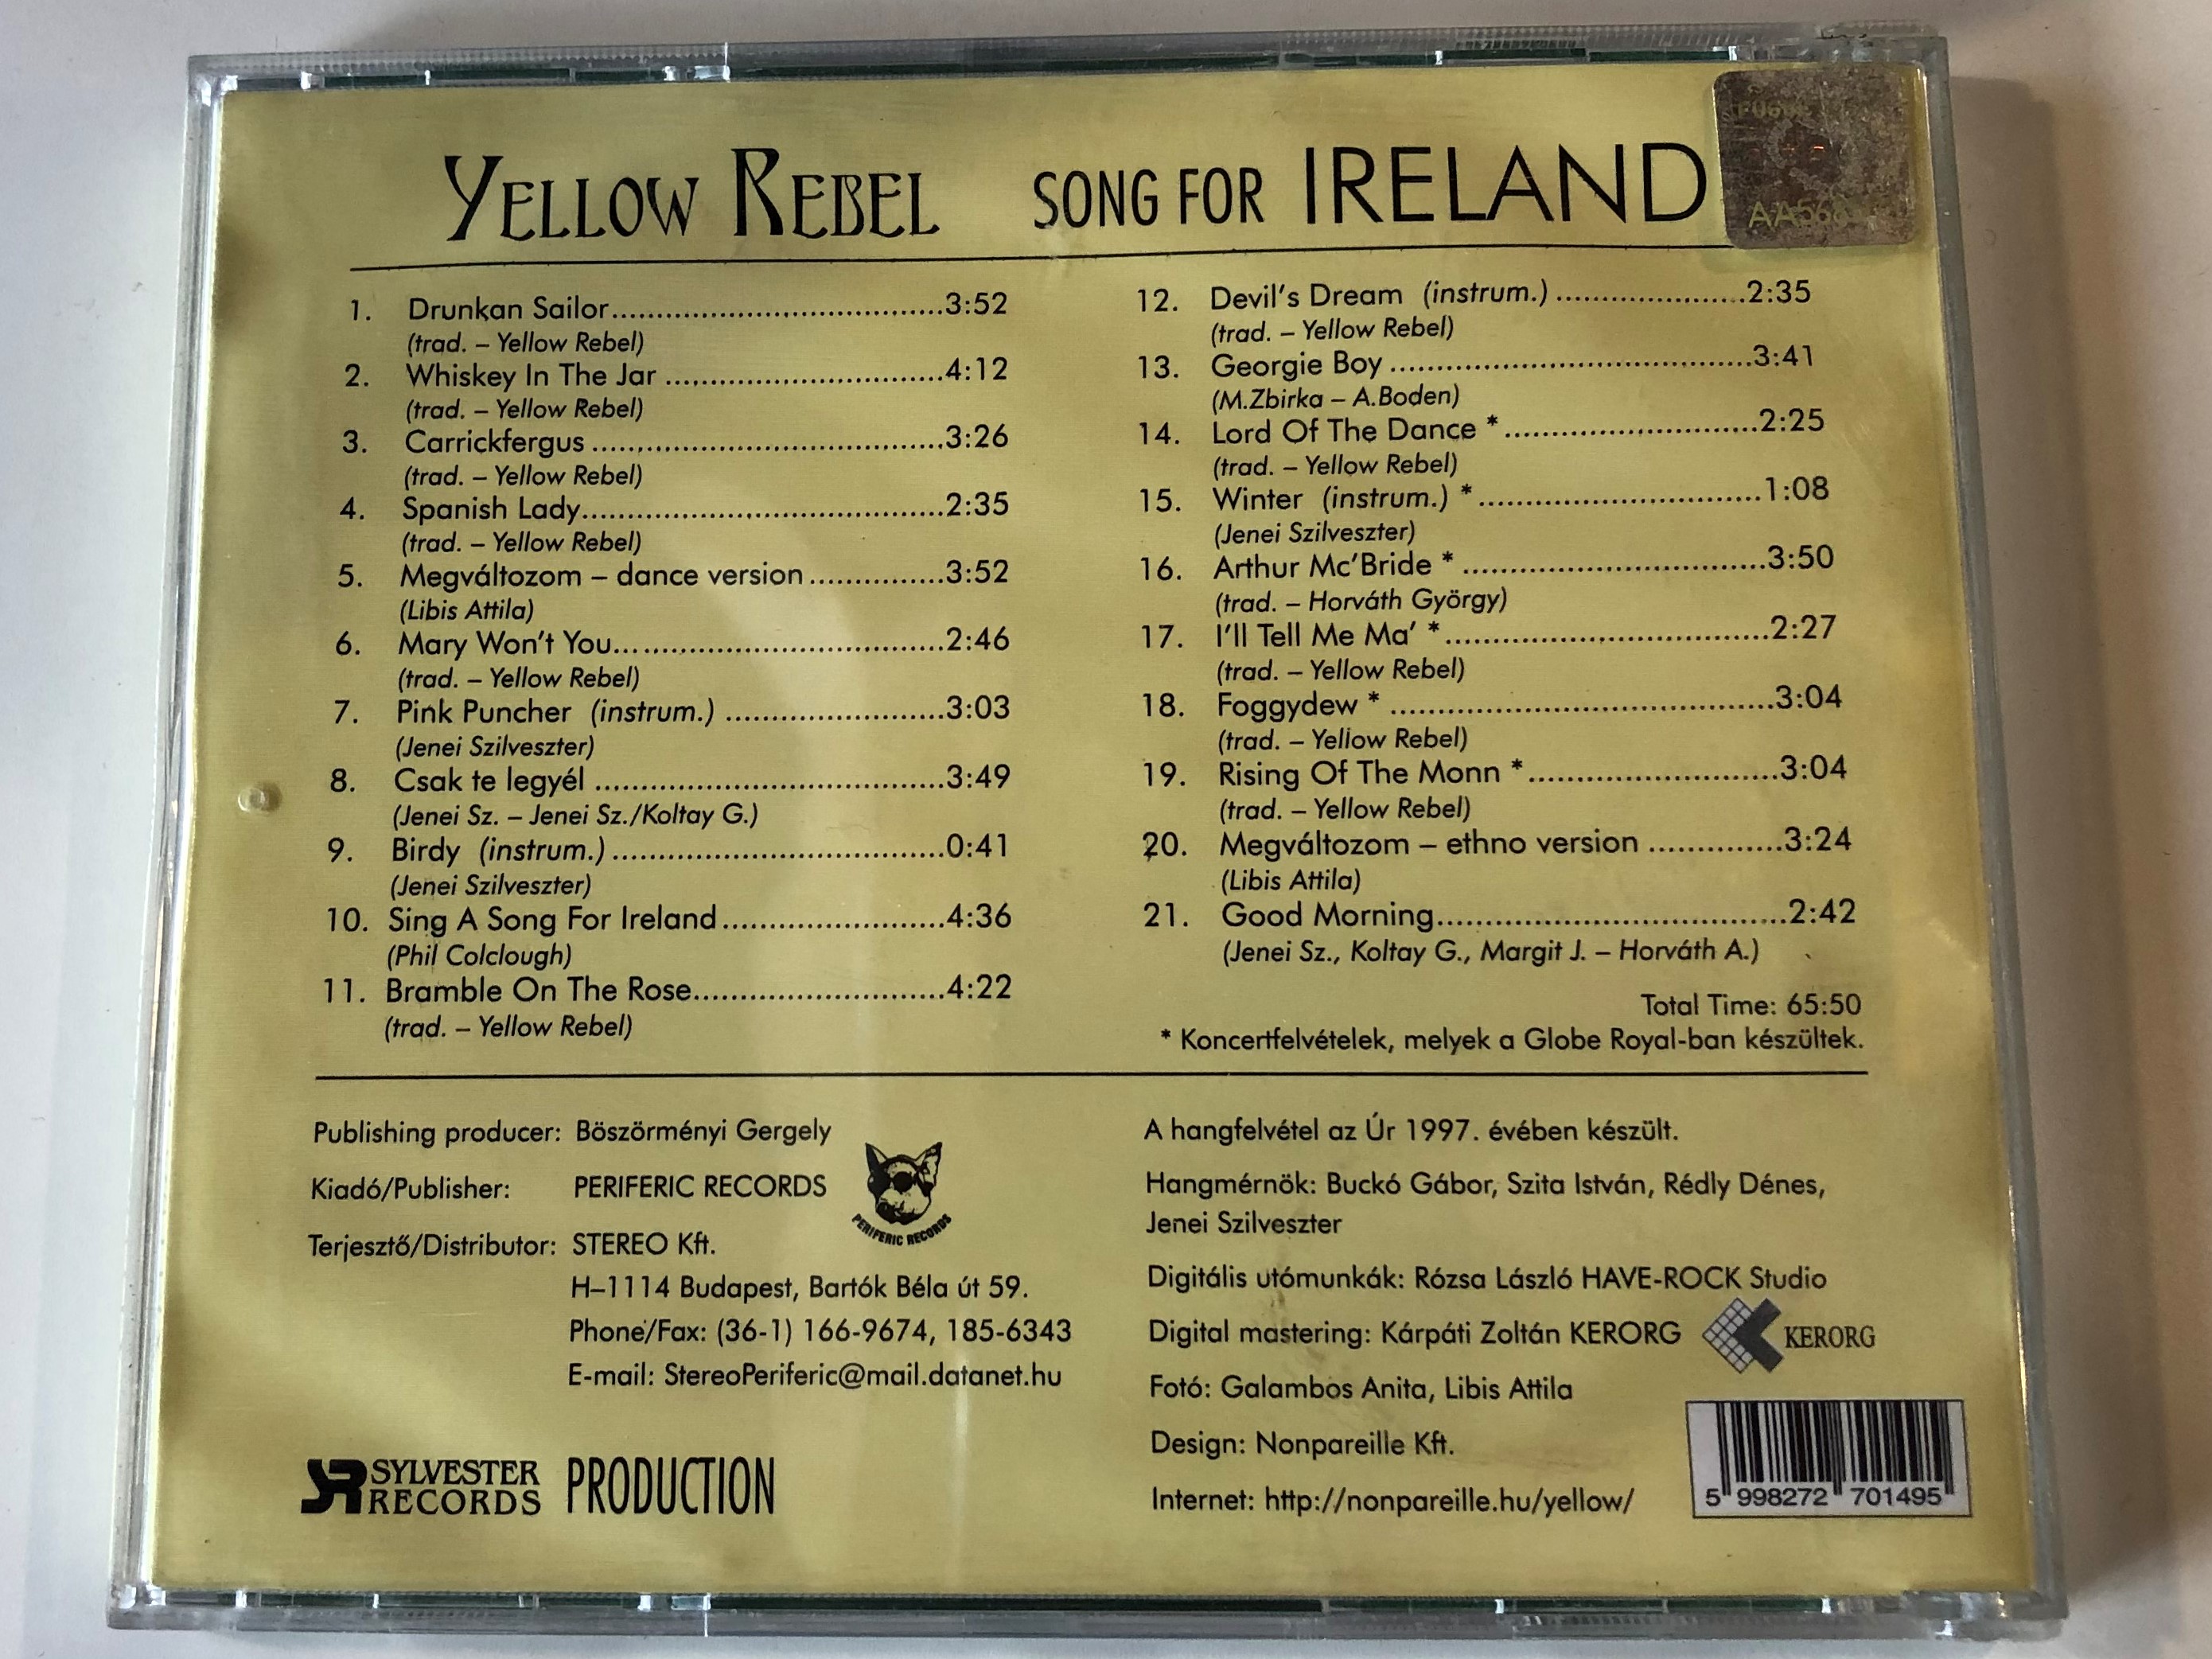 yellow-rebel-song-for-ireland-periferic-records-audio-cd-1997-bgcd-012-4-.jpg